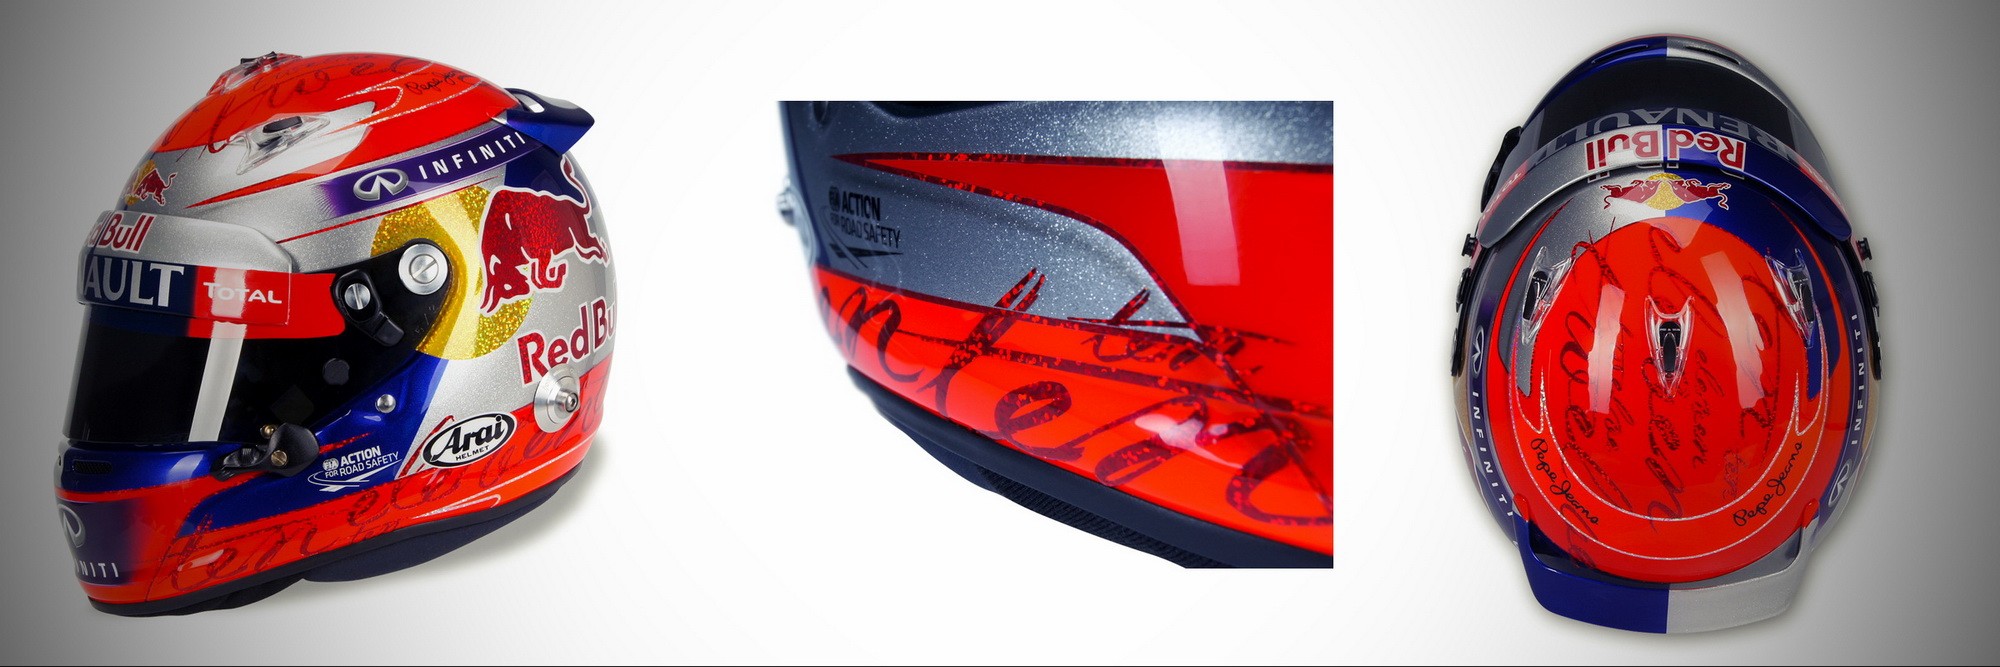 Шлем Себастьяна Феттеля на Гран-При Китая 2013 | 2013 Chinese Grand Prix helmet of Sebastian Vettel